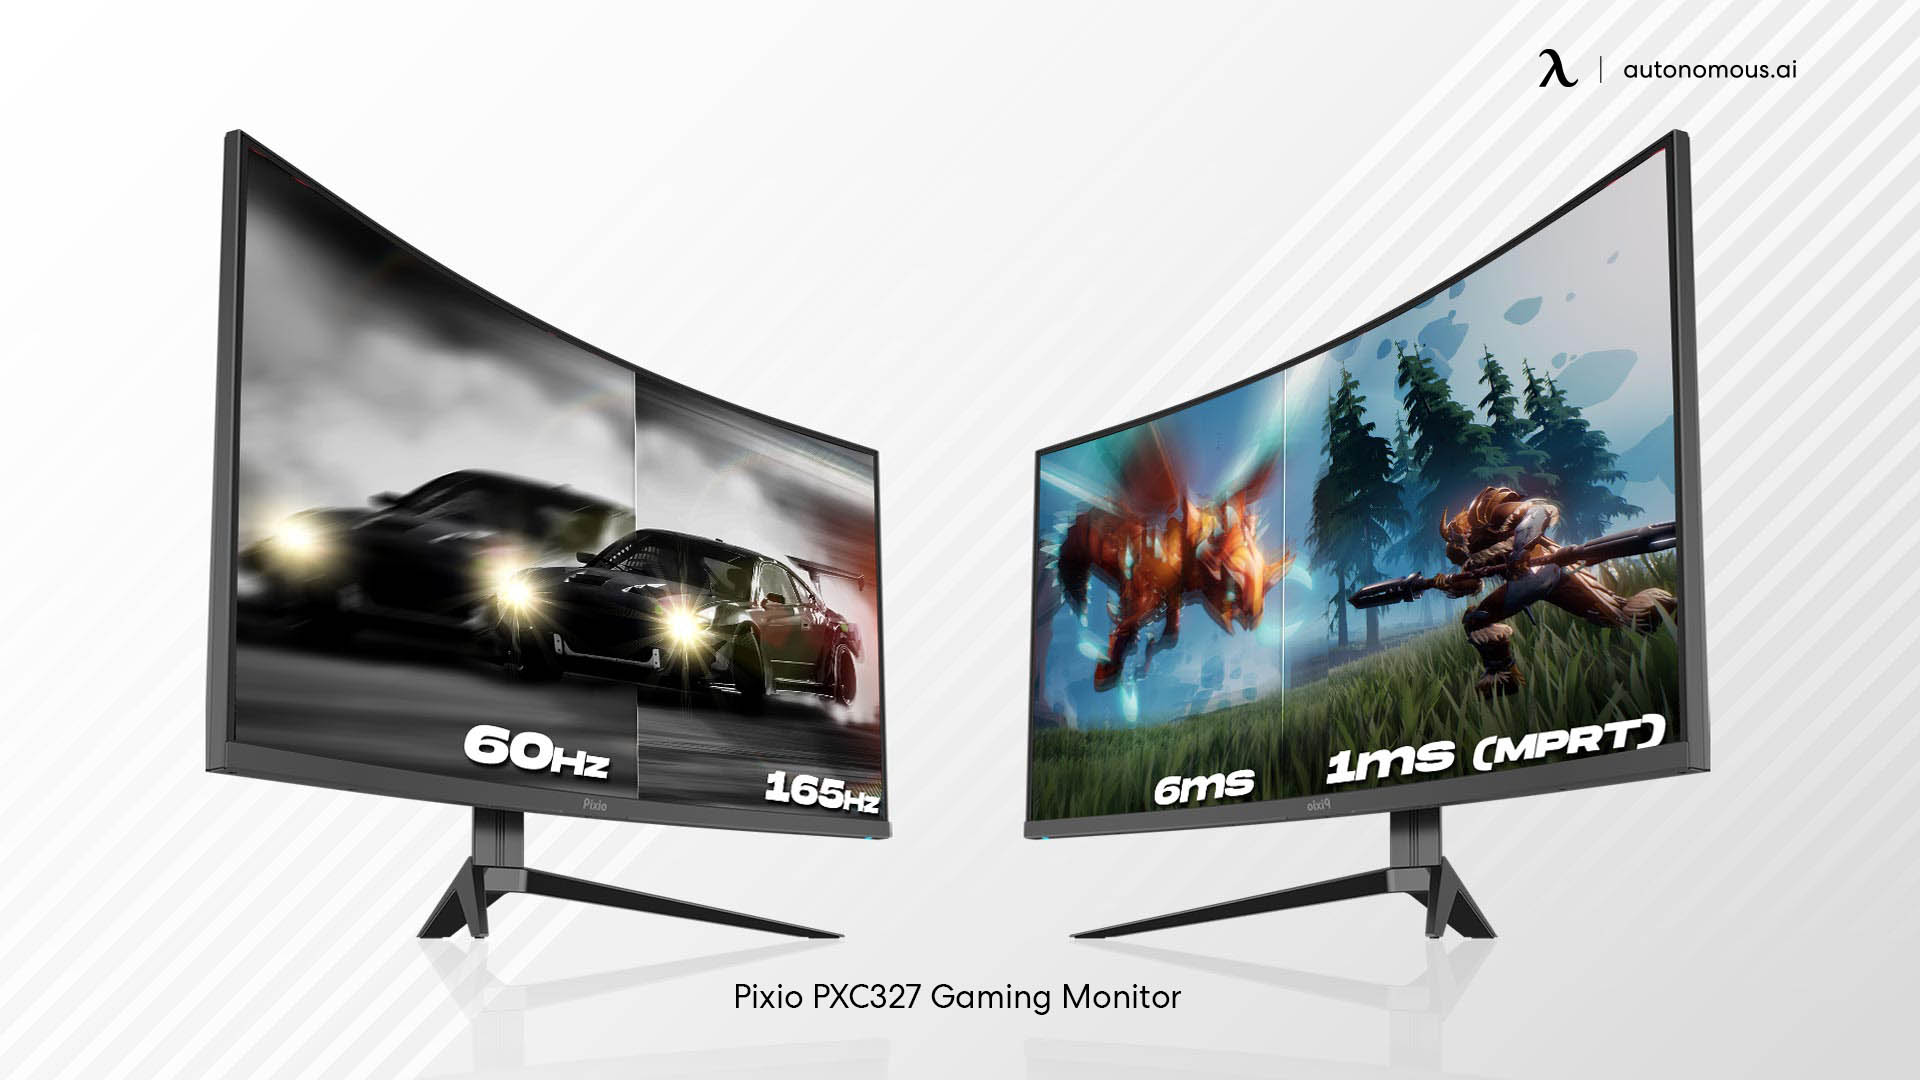 Pixio PXC327 Gaming Monitor